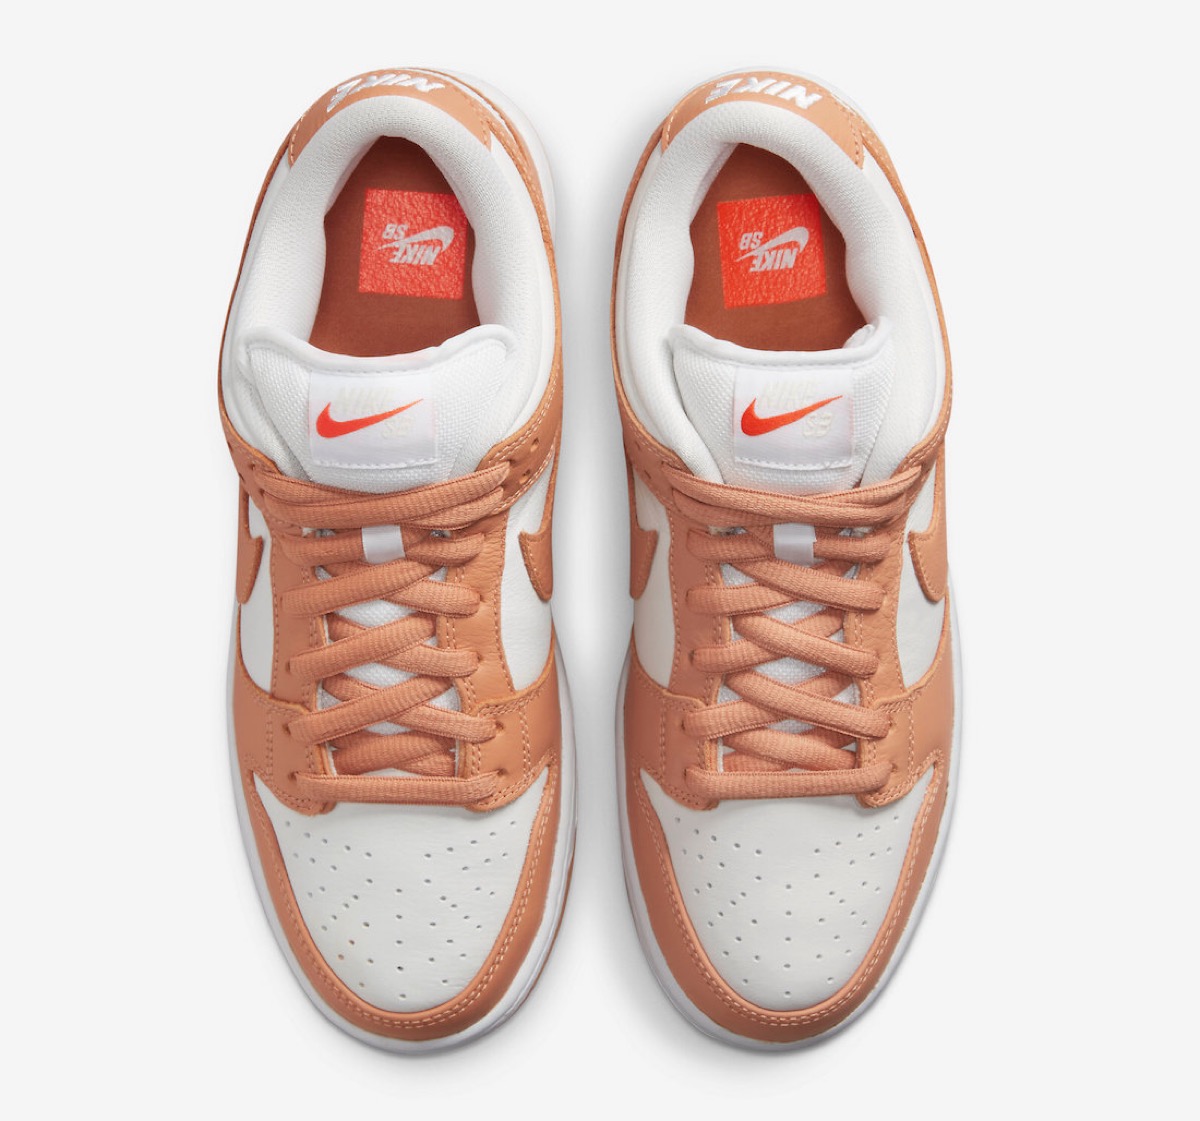 Nike SB Dunk Low Pro ISO “Light Cognac” Orange Labelが国内4月16日